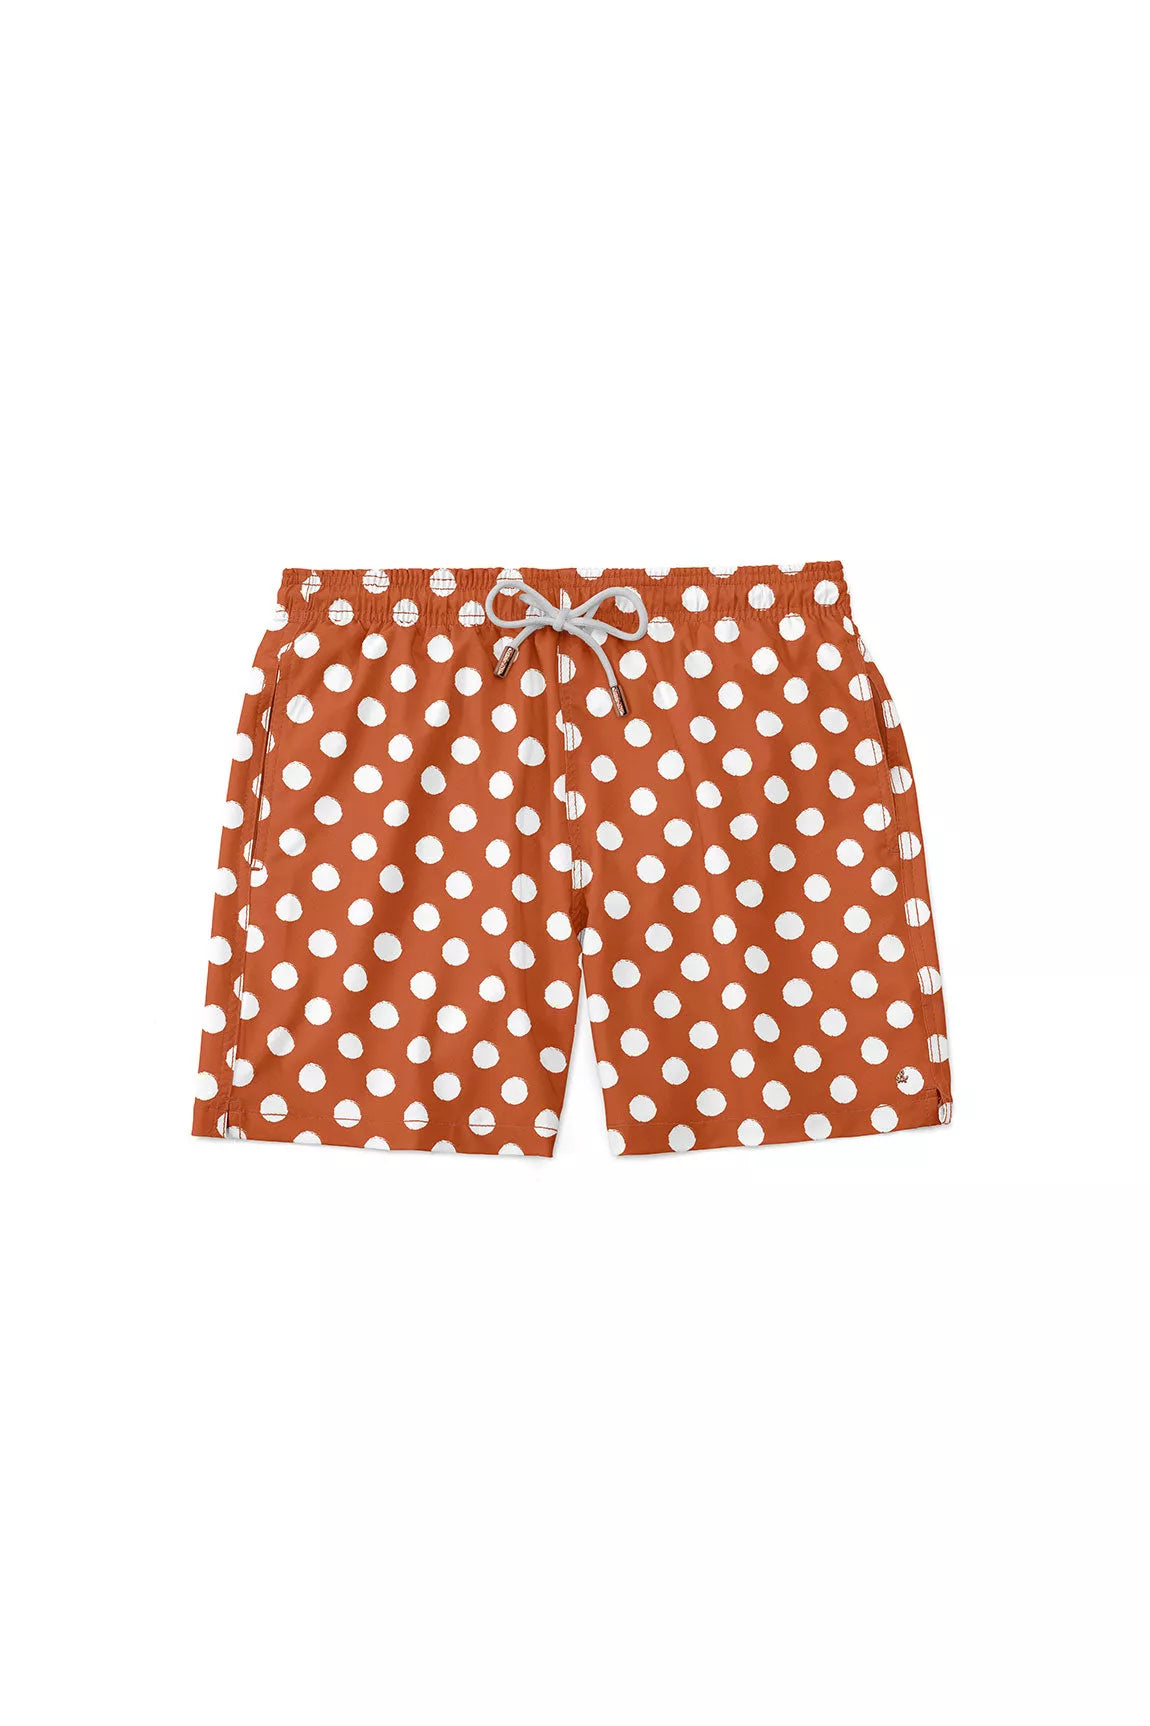 Pantaloneta Vintage Dots -Burnt Orange